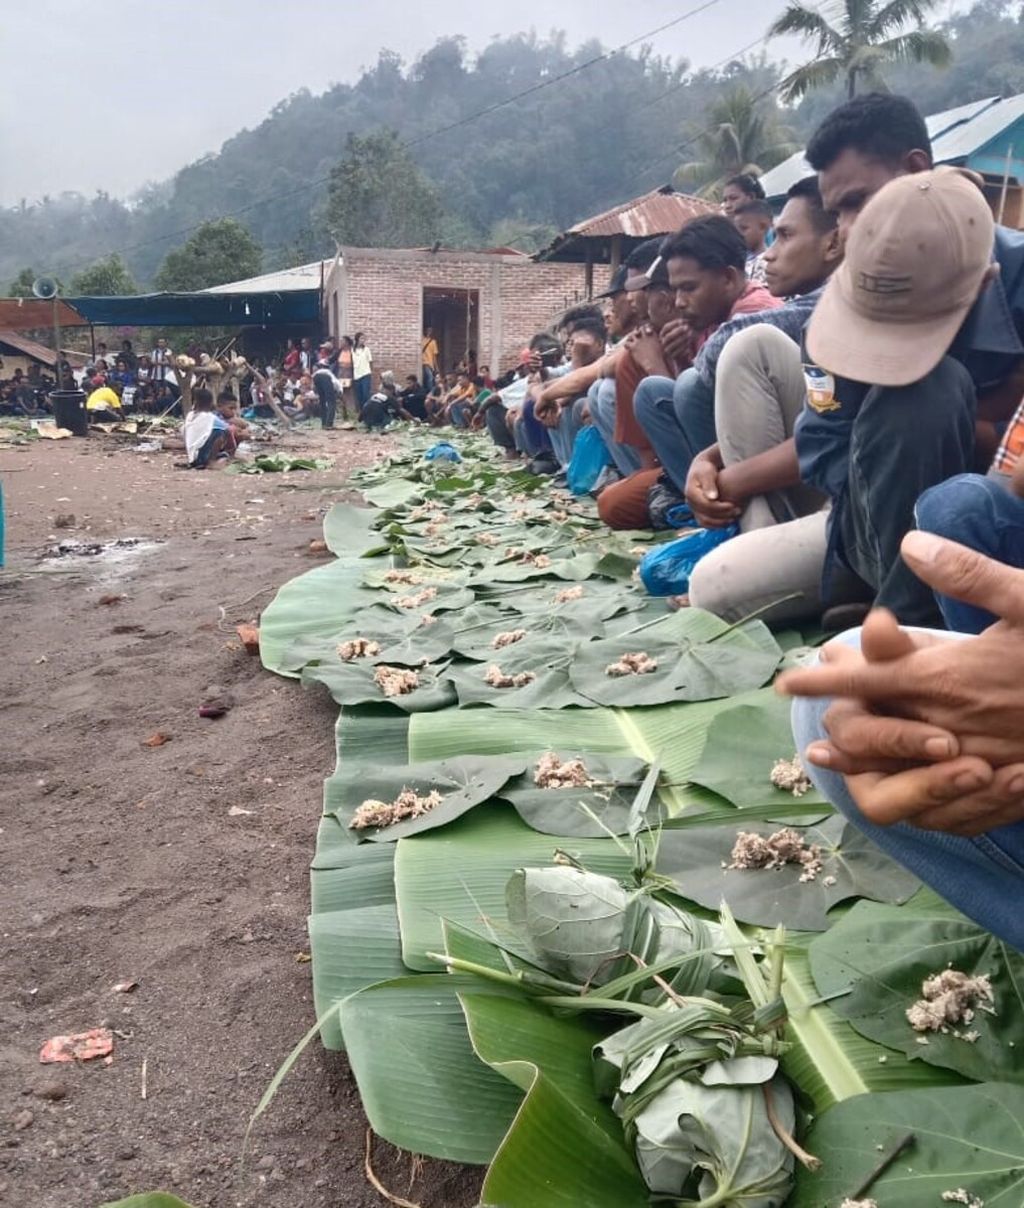 Ribuan peserta ritual adat "tuno manuk", di kampung Demondei, Flores Timur. Peserta ritual adalah perwakilan dari lima suku di desa itu. Mereka duduk melingkar untuk makan perjamuan bersama, Senin (27/9/2021).